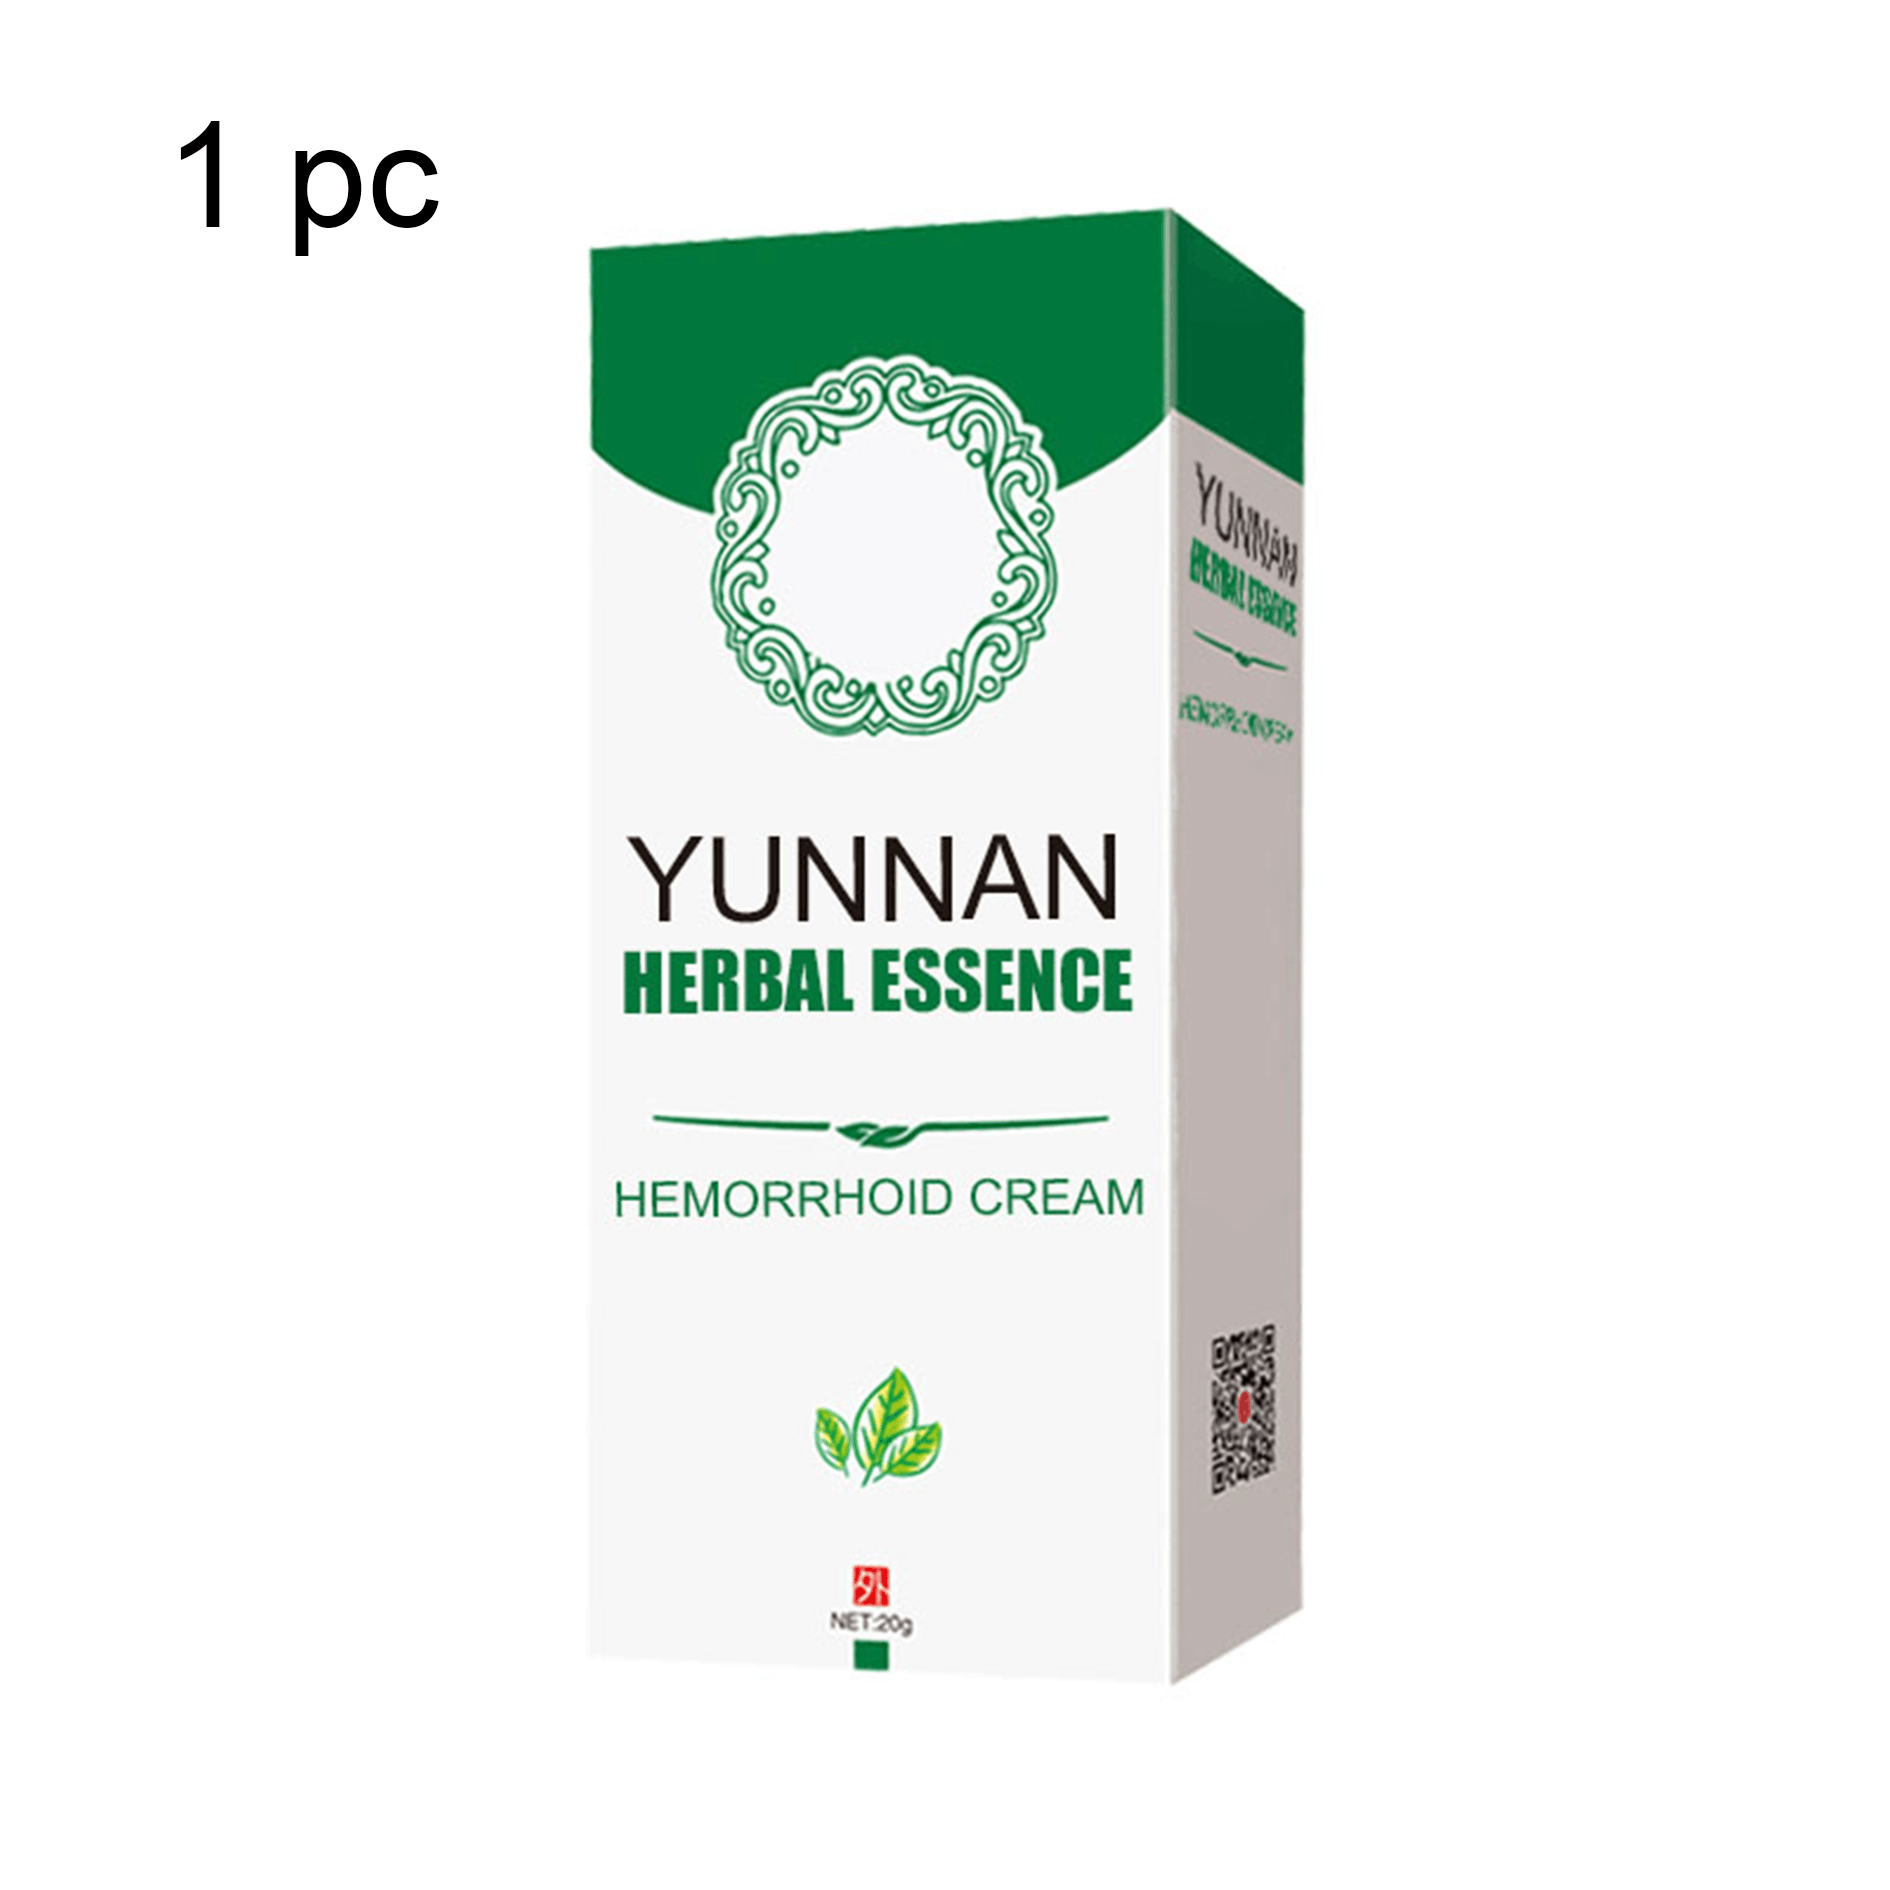 Yunnan Herbal Essence Hemorrhoid Cream JC 1688 1pc - USD$21.97 